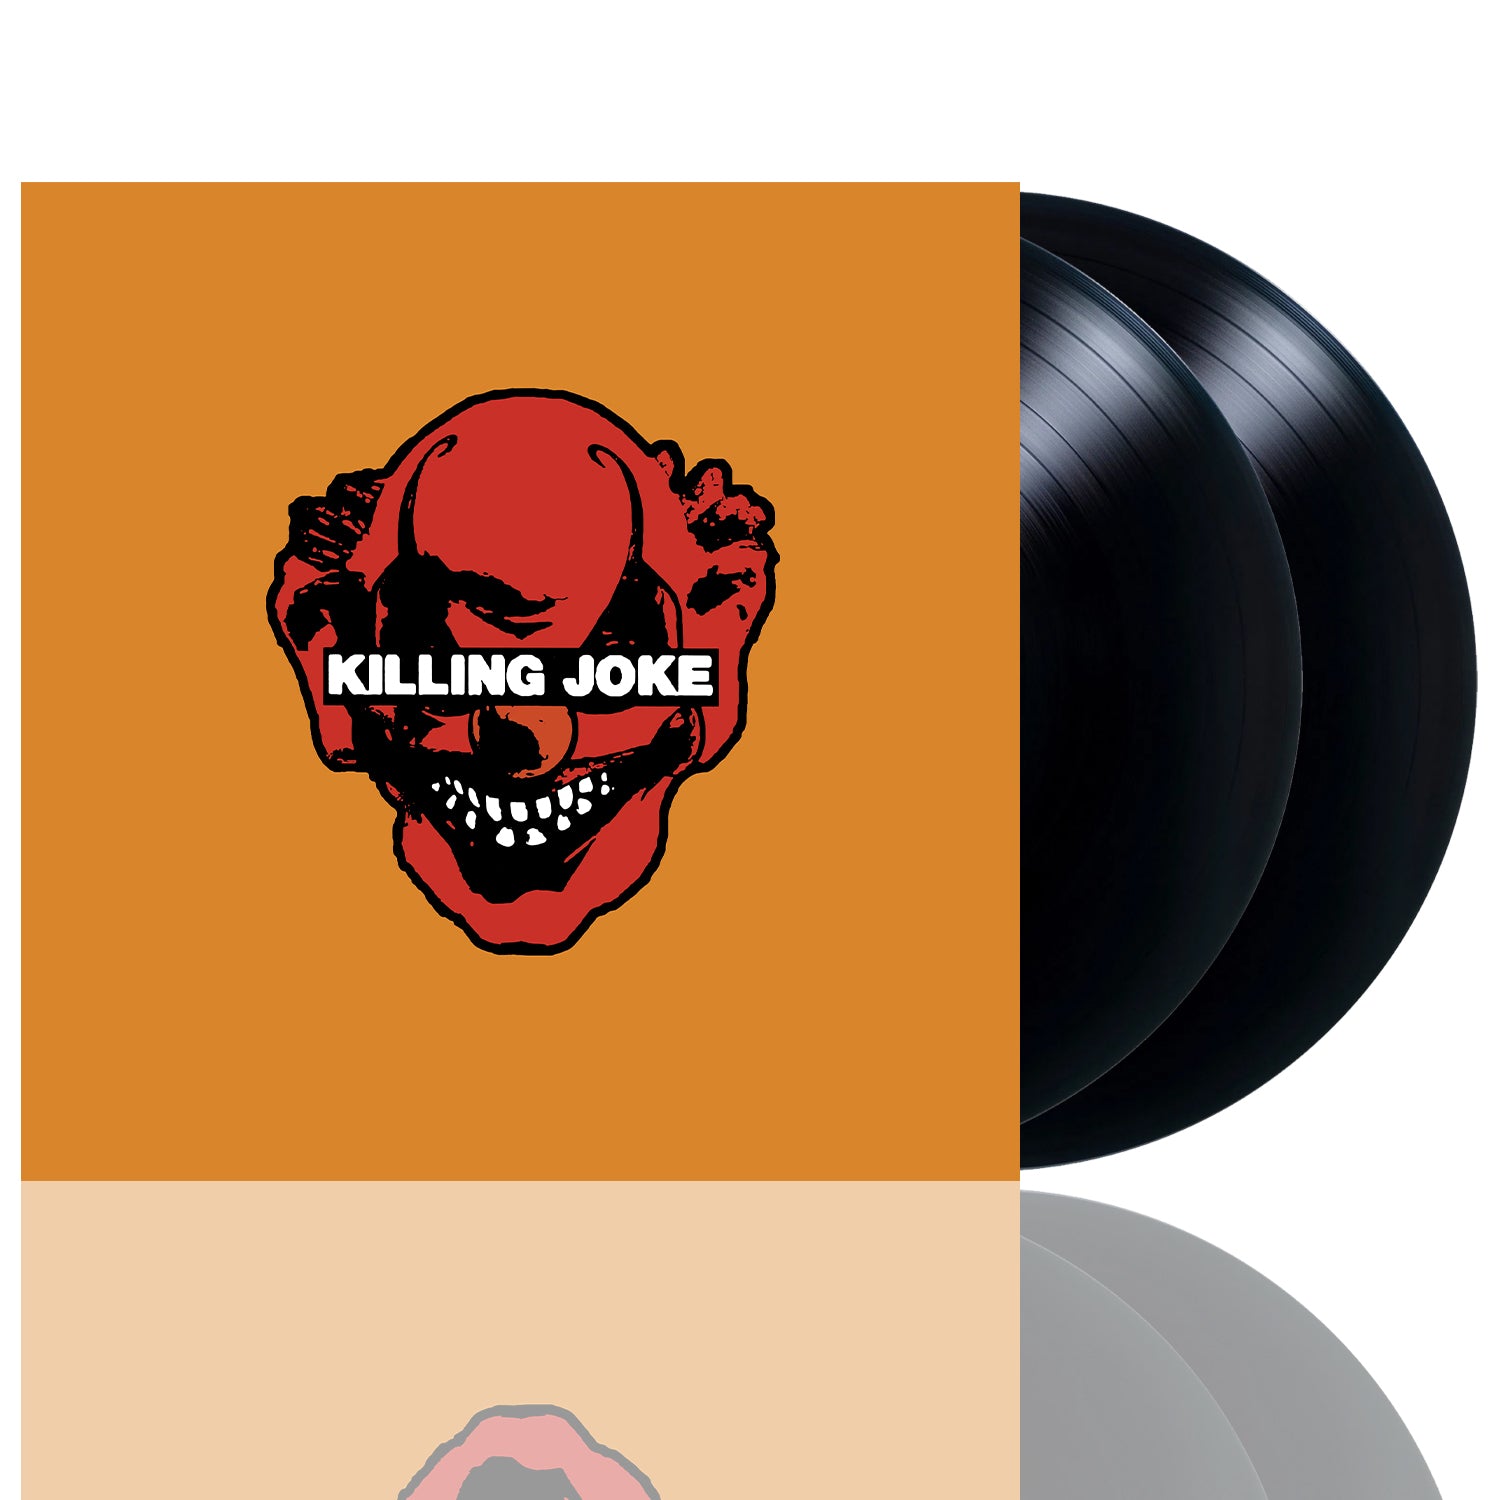 Killing Joke - Killing Joke 2003 (2LP Black Vinyl)